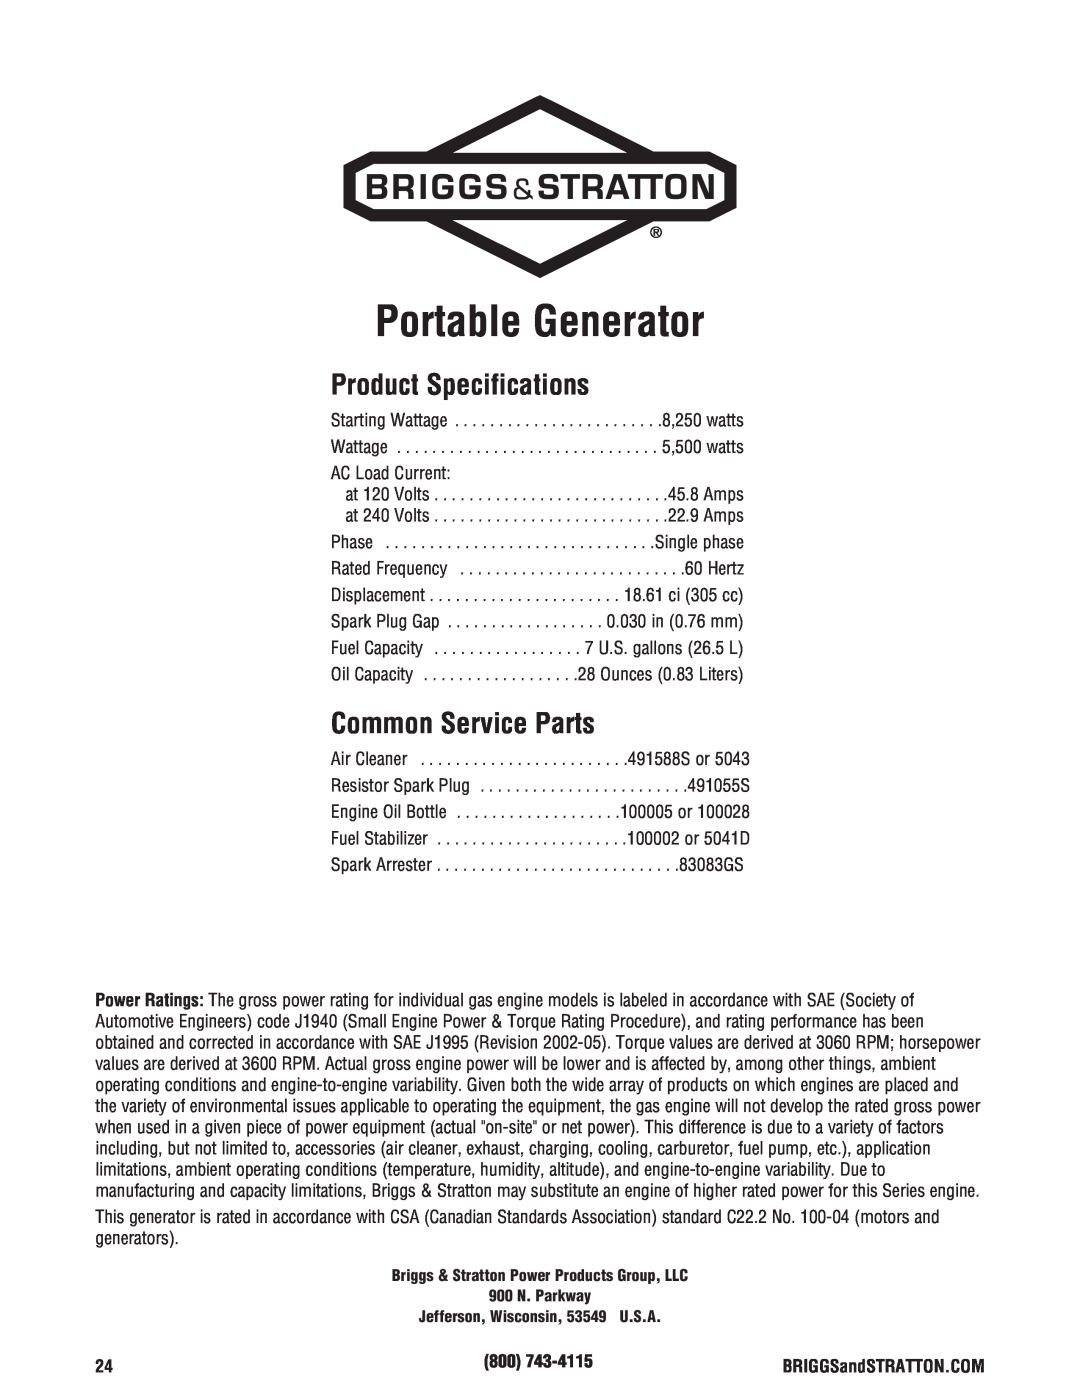 Briggs & Stratton Portable Generator manual Product Specifications, Common Service Parts 